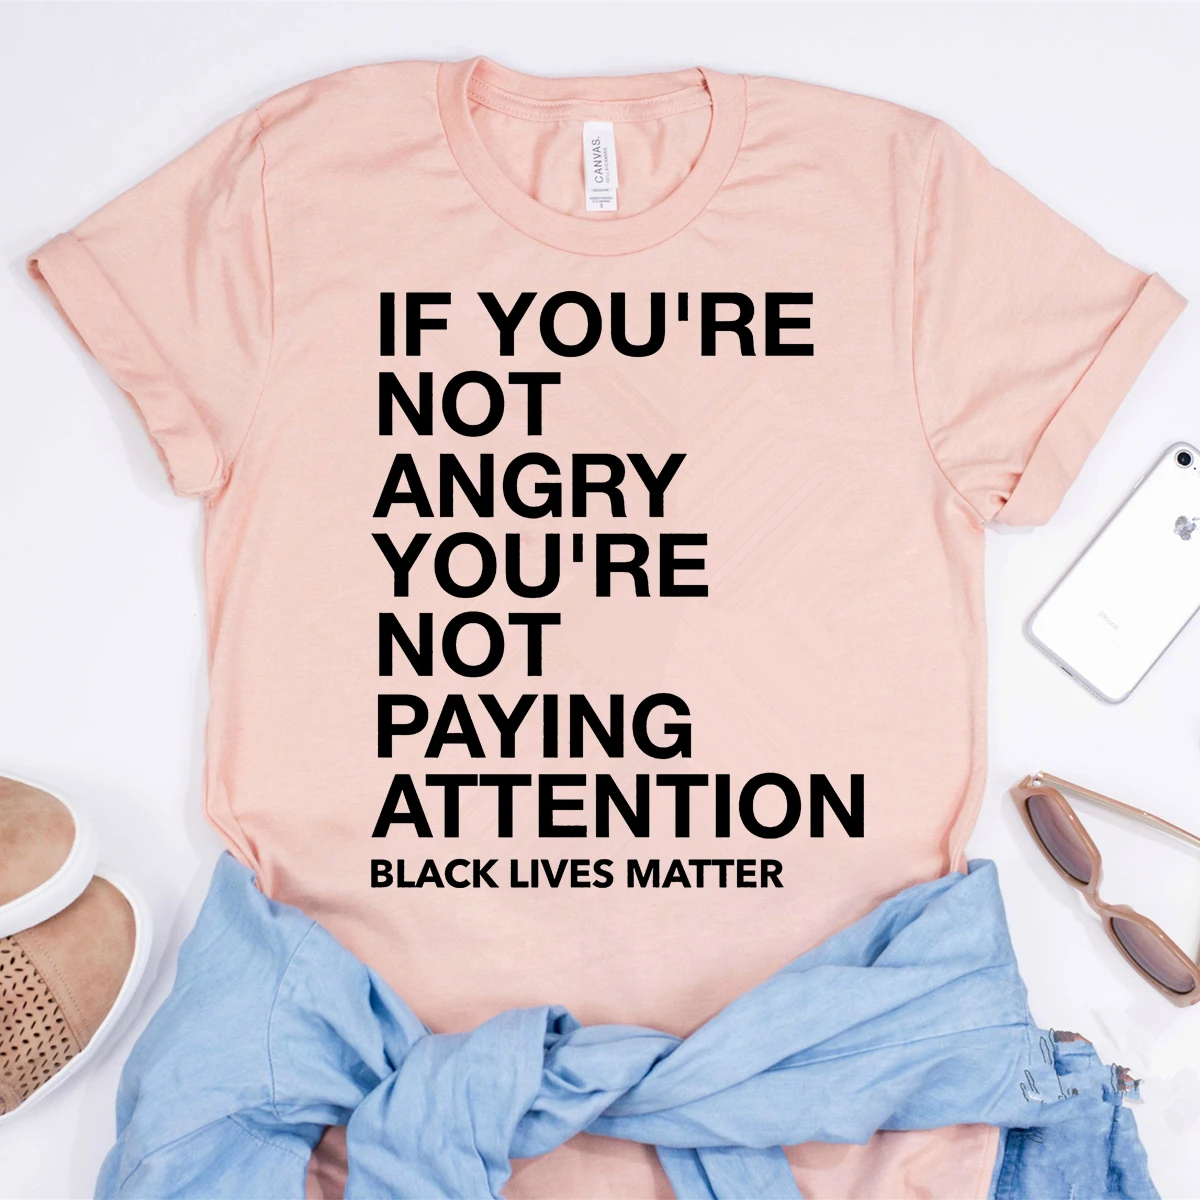 Black Lives Matter Unisex T-Shirt  Top Graphic Sarcastic Funny Power T-shirts 